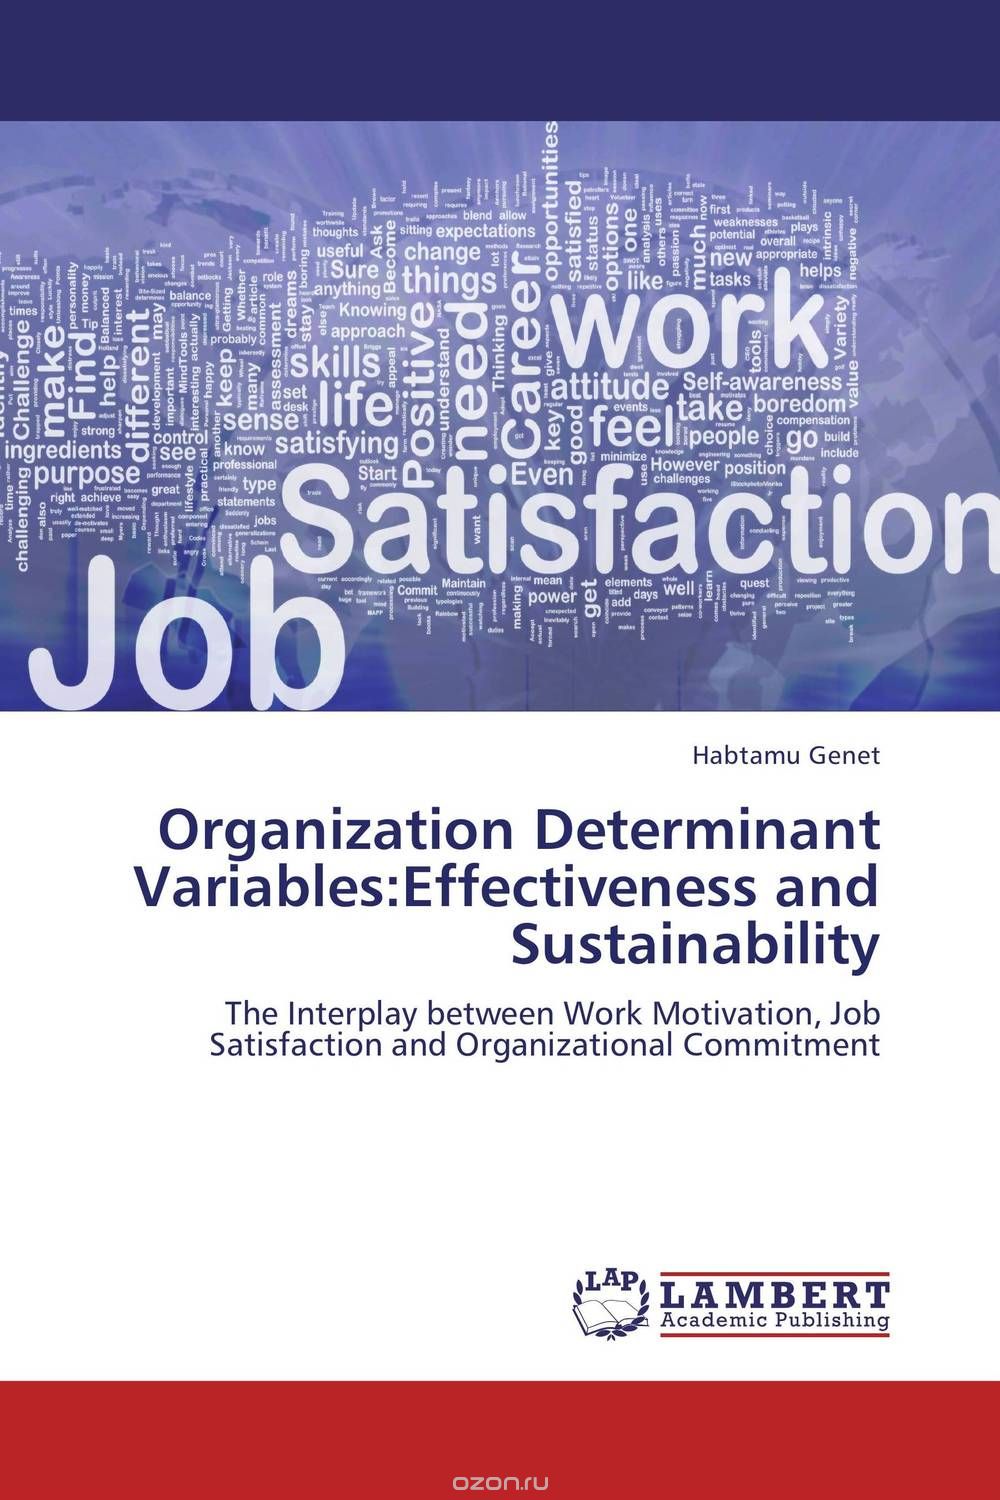 Скачать книгу "Organization Determinant Variables:Effectiveness and Sustainability"